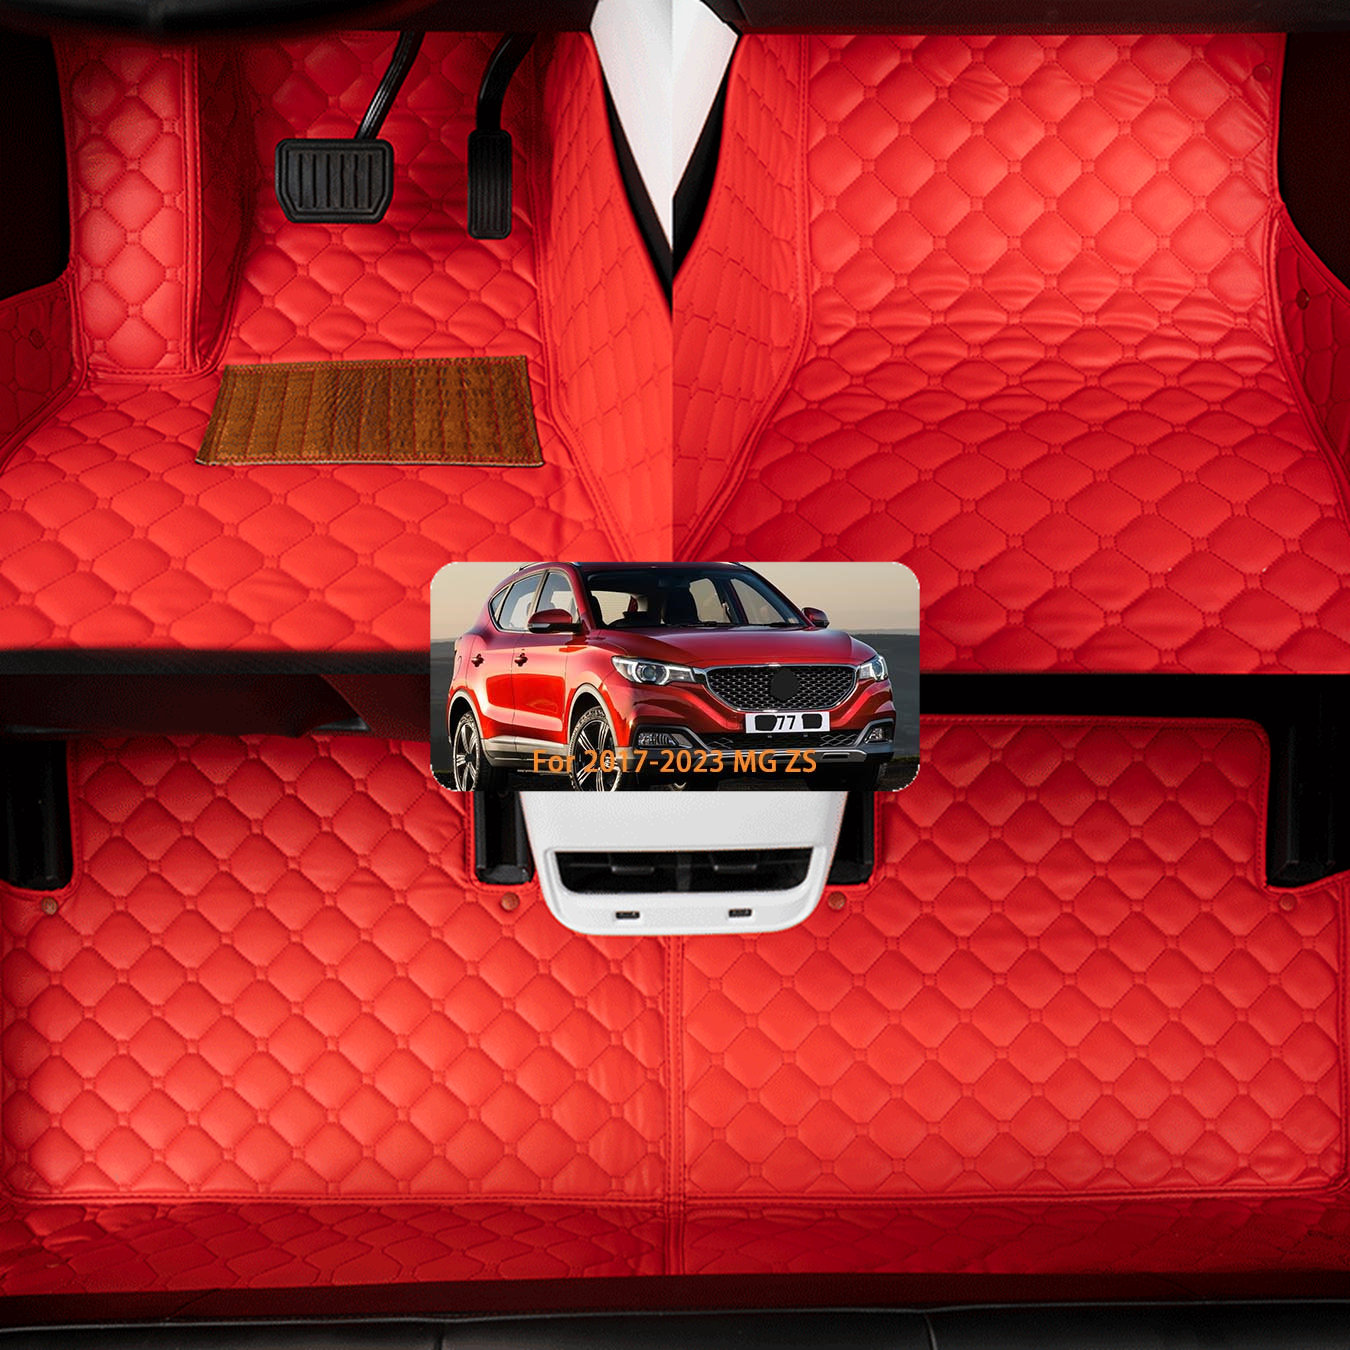 Car Floor Mats for Morris Garages MG5 MG 5 2023 2022 2021 Carpets